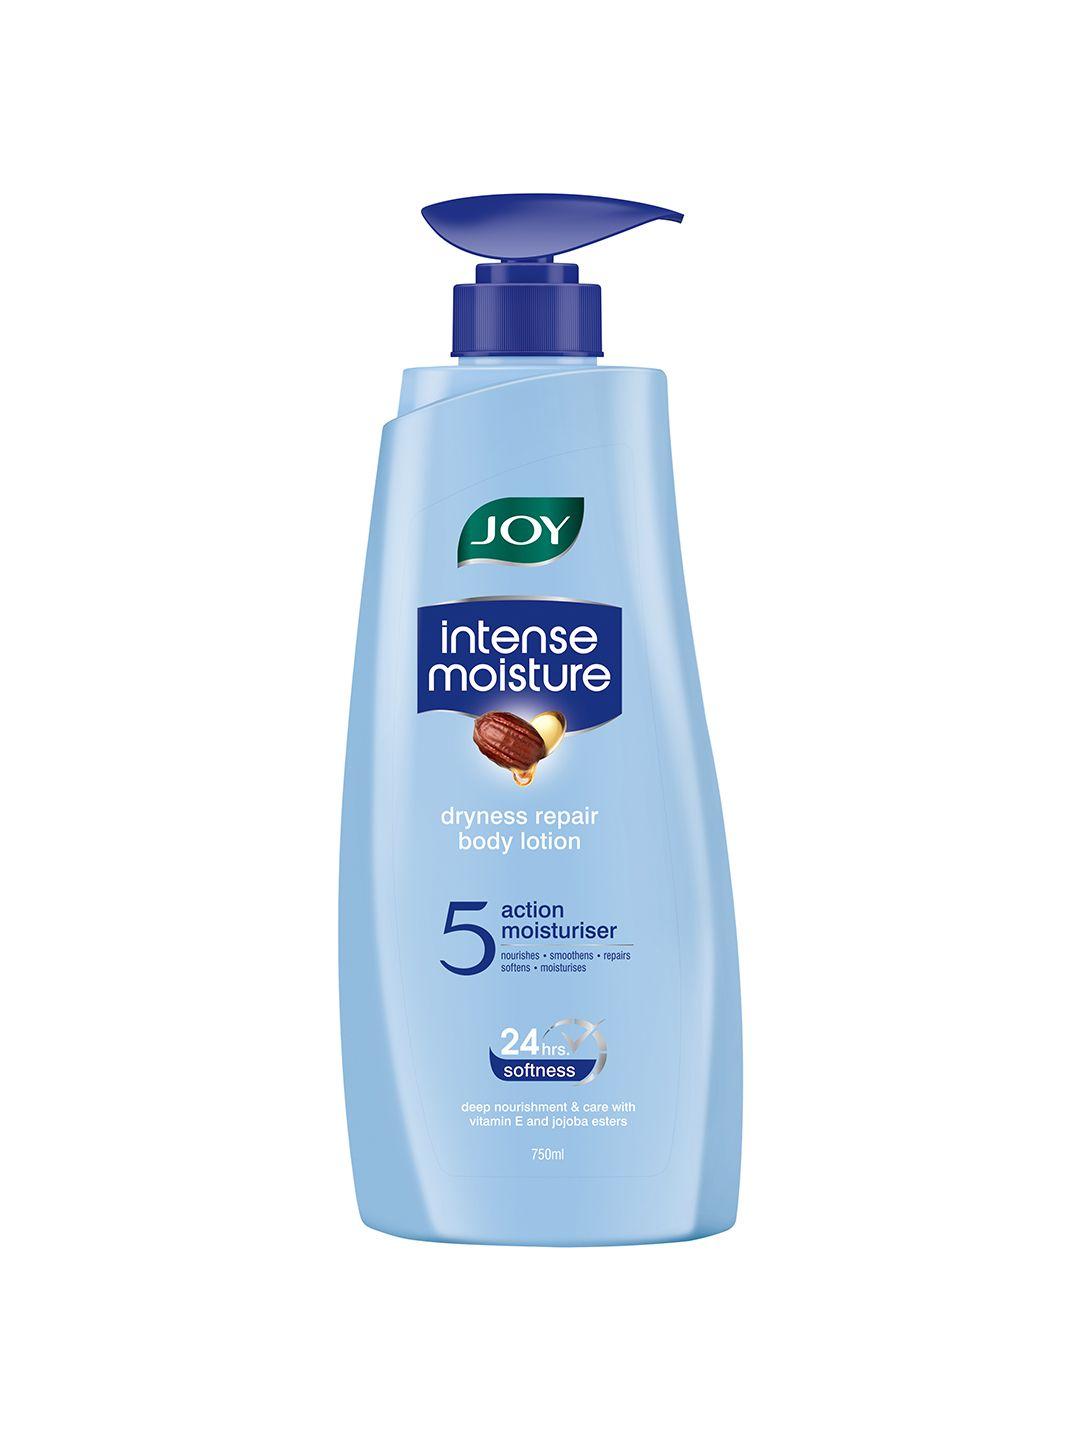 joy intense moisture dryness repair body lotion - 750 ml